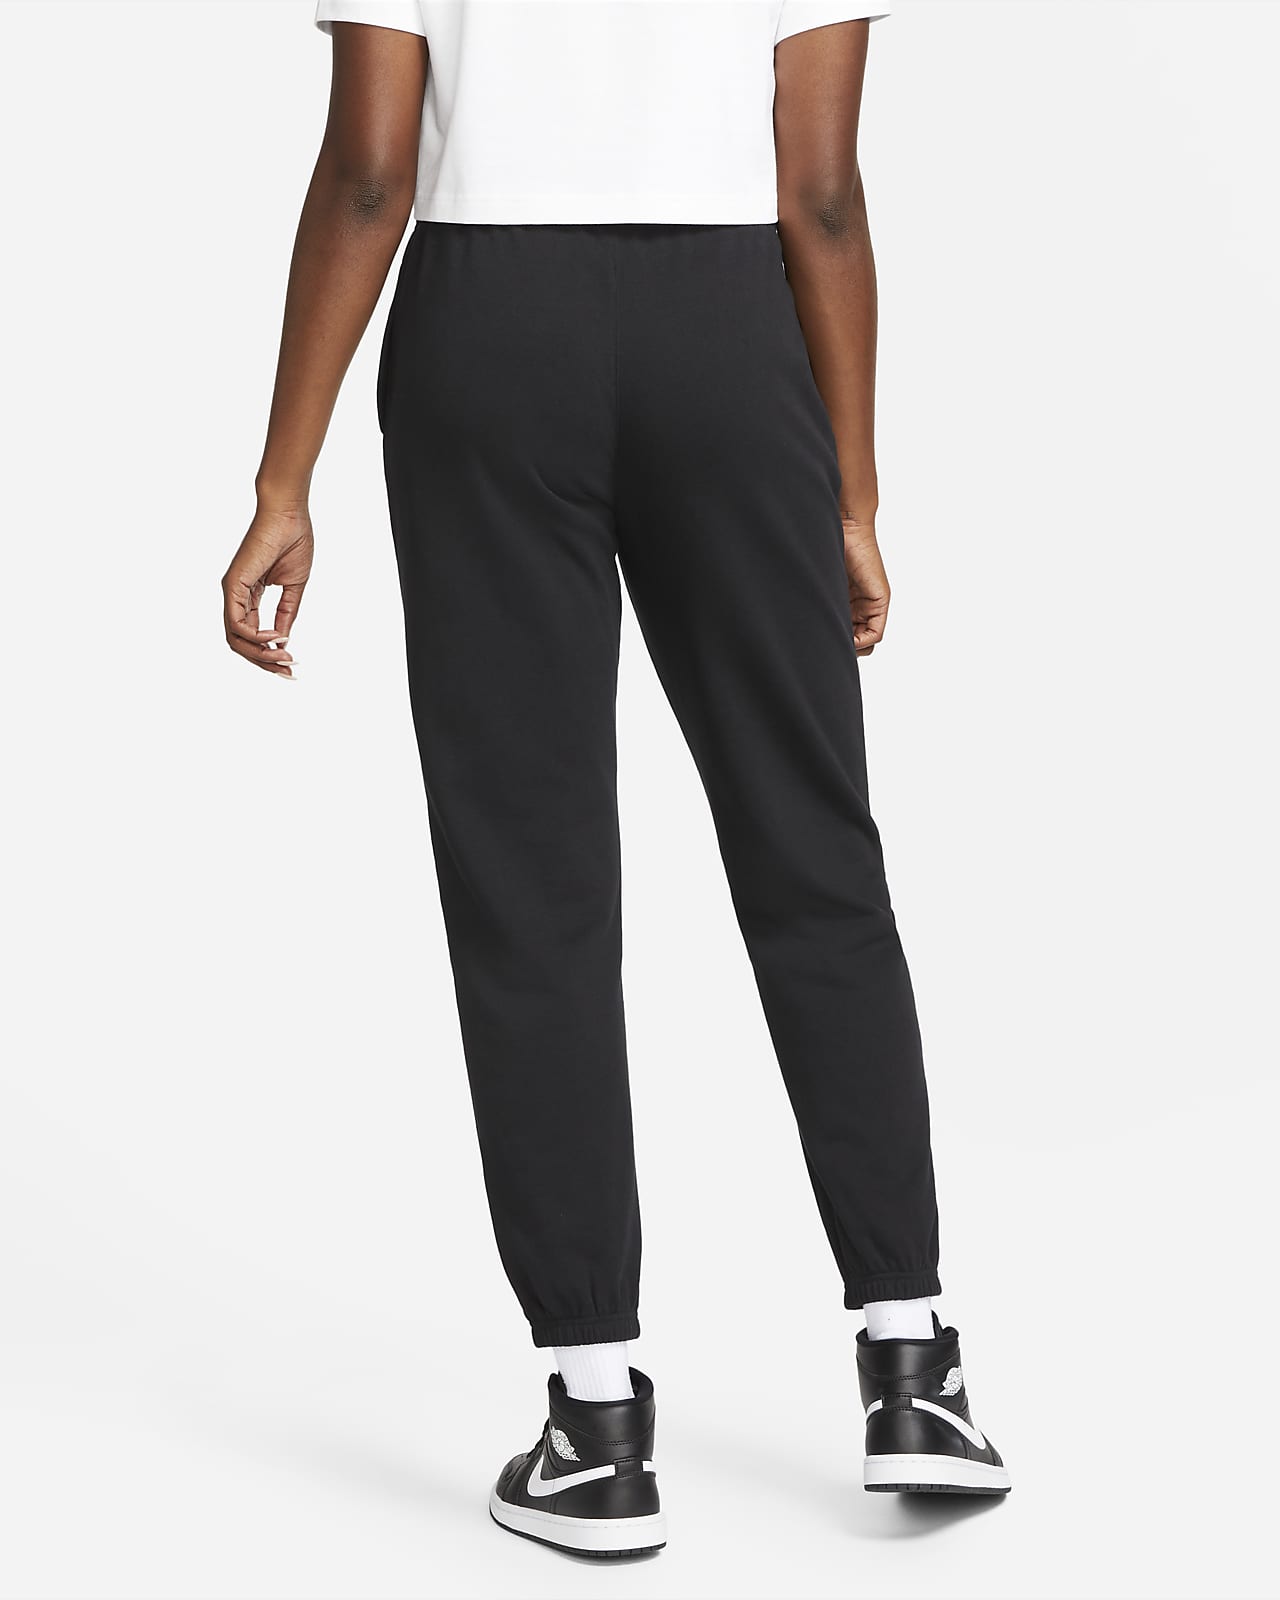 Nike Air Jordan Cozy Girl Women's Fleece Pants Size Small DJ2731-140 NWT  $120